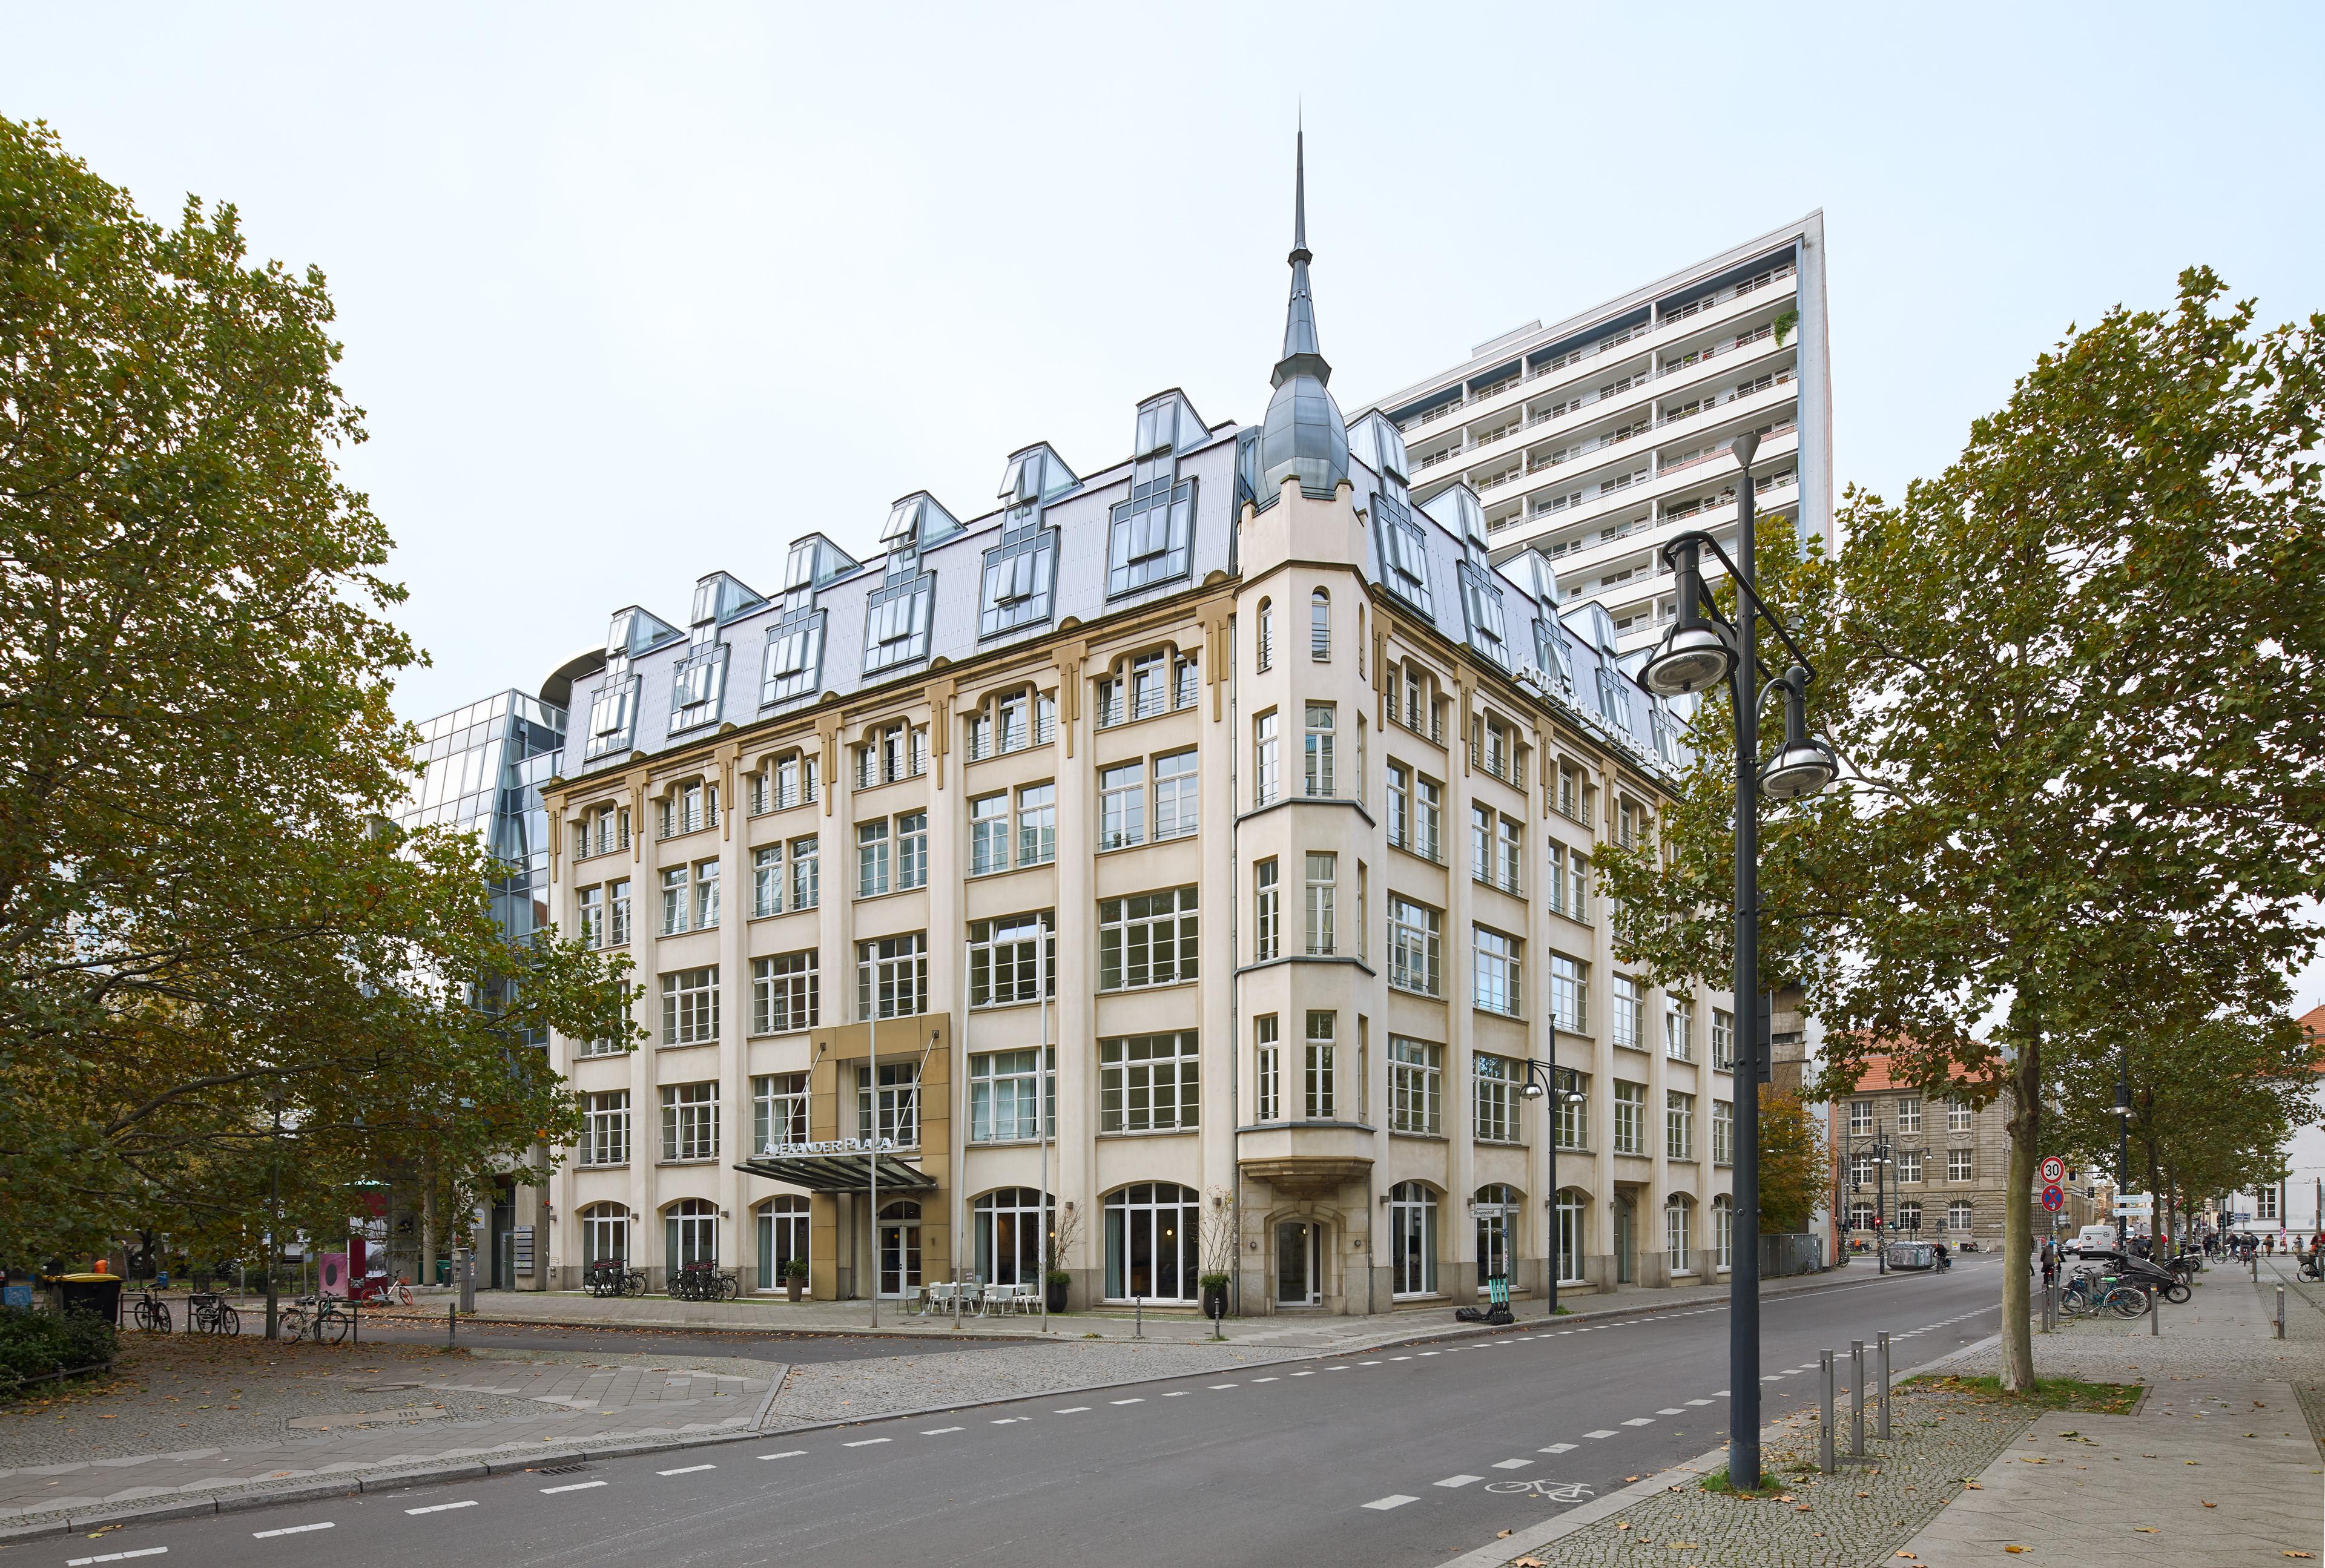 Classik Hotel Alexander Plaza Berlin Exterior photo